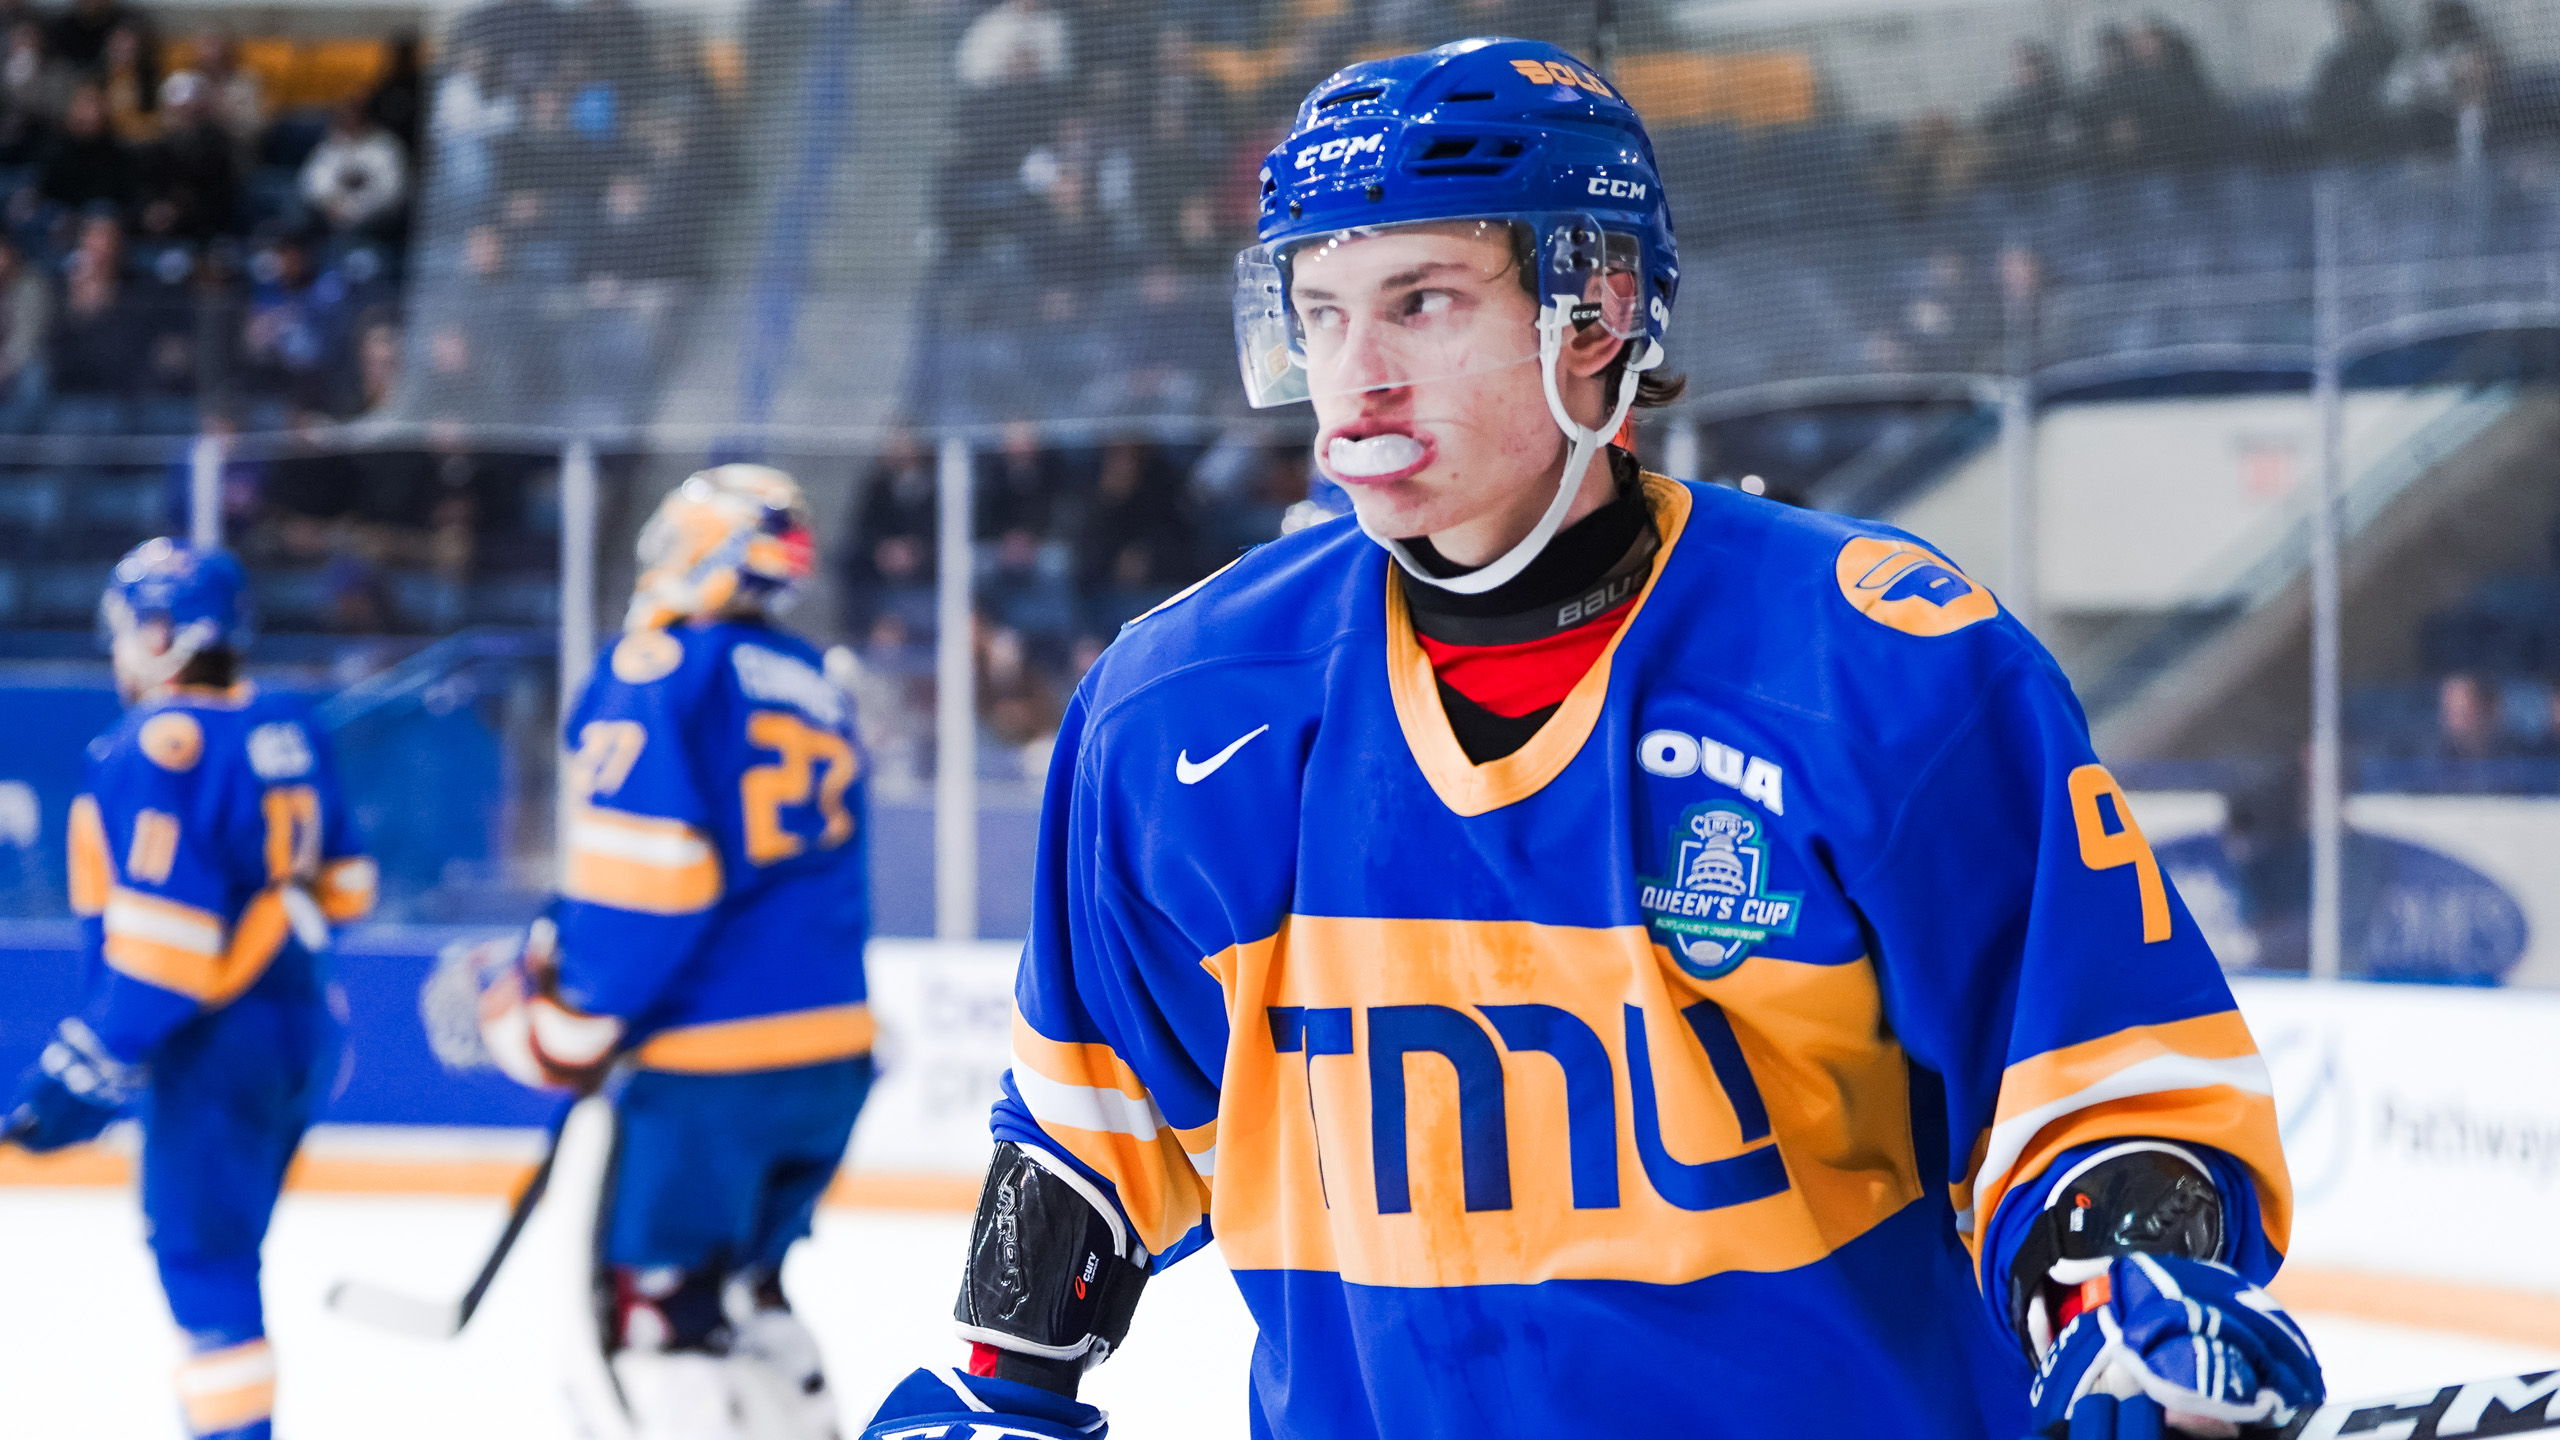 TMU forward Daniil Grigorev skates on the ice